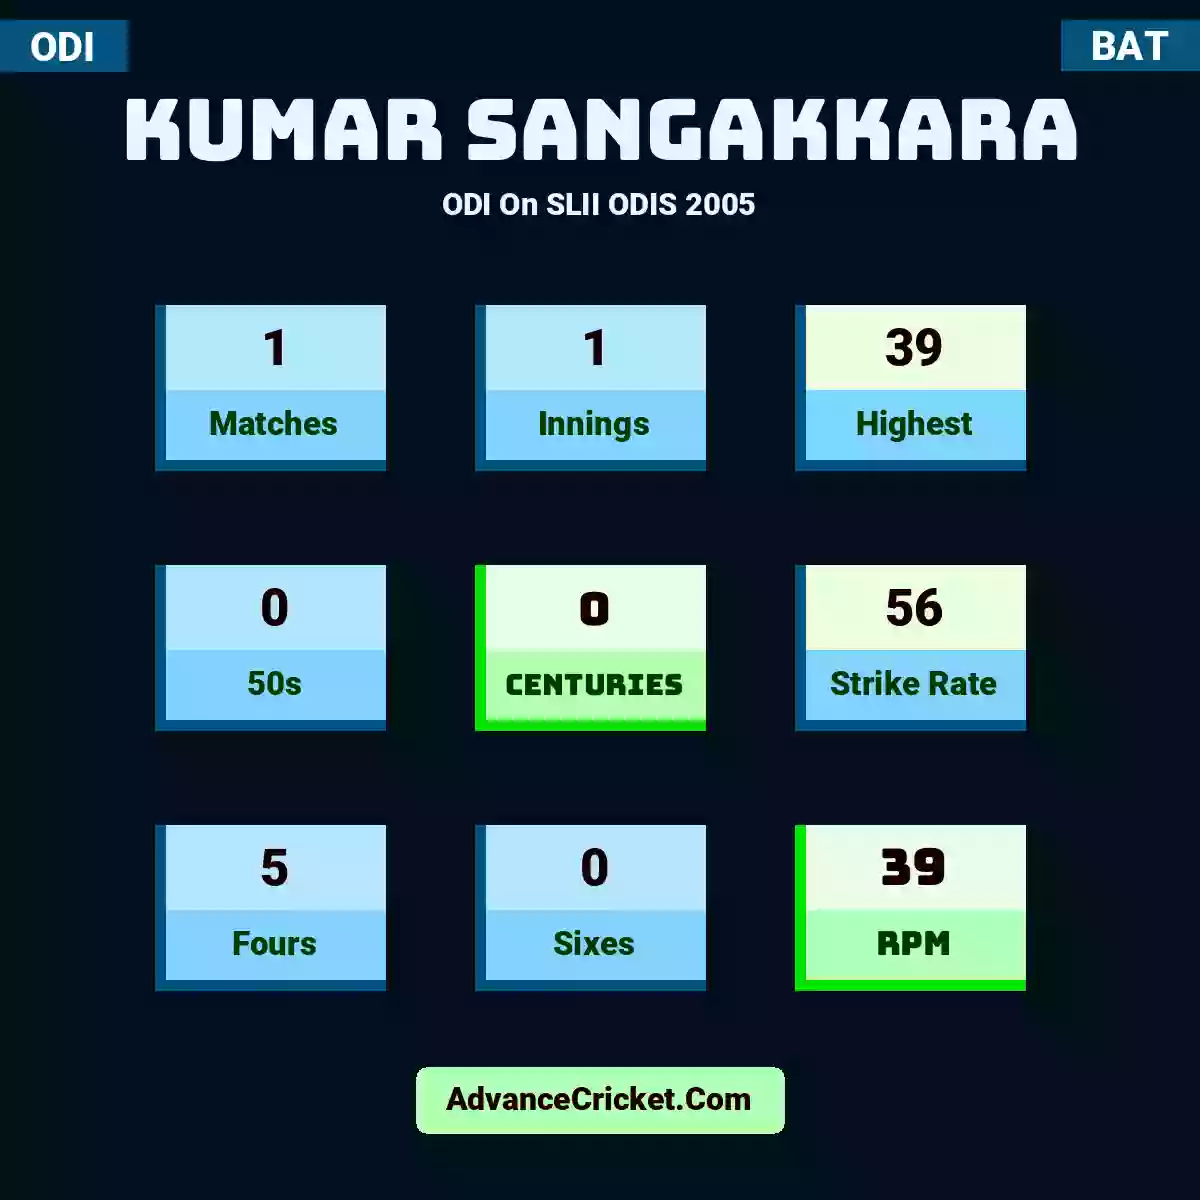 Kumar Sangakkara ODI  On SLII ODIS 2005, Kumar Sangakkara played 1 matches, scored 39 runs as highest, 0 half-centuries, and 0 centuries, with a strike rate of 56. K.Sangakkara hit 5 fours and 0 sixes, with an RPM of 39.